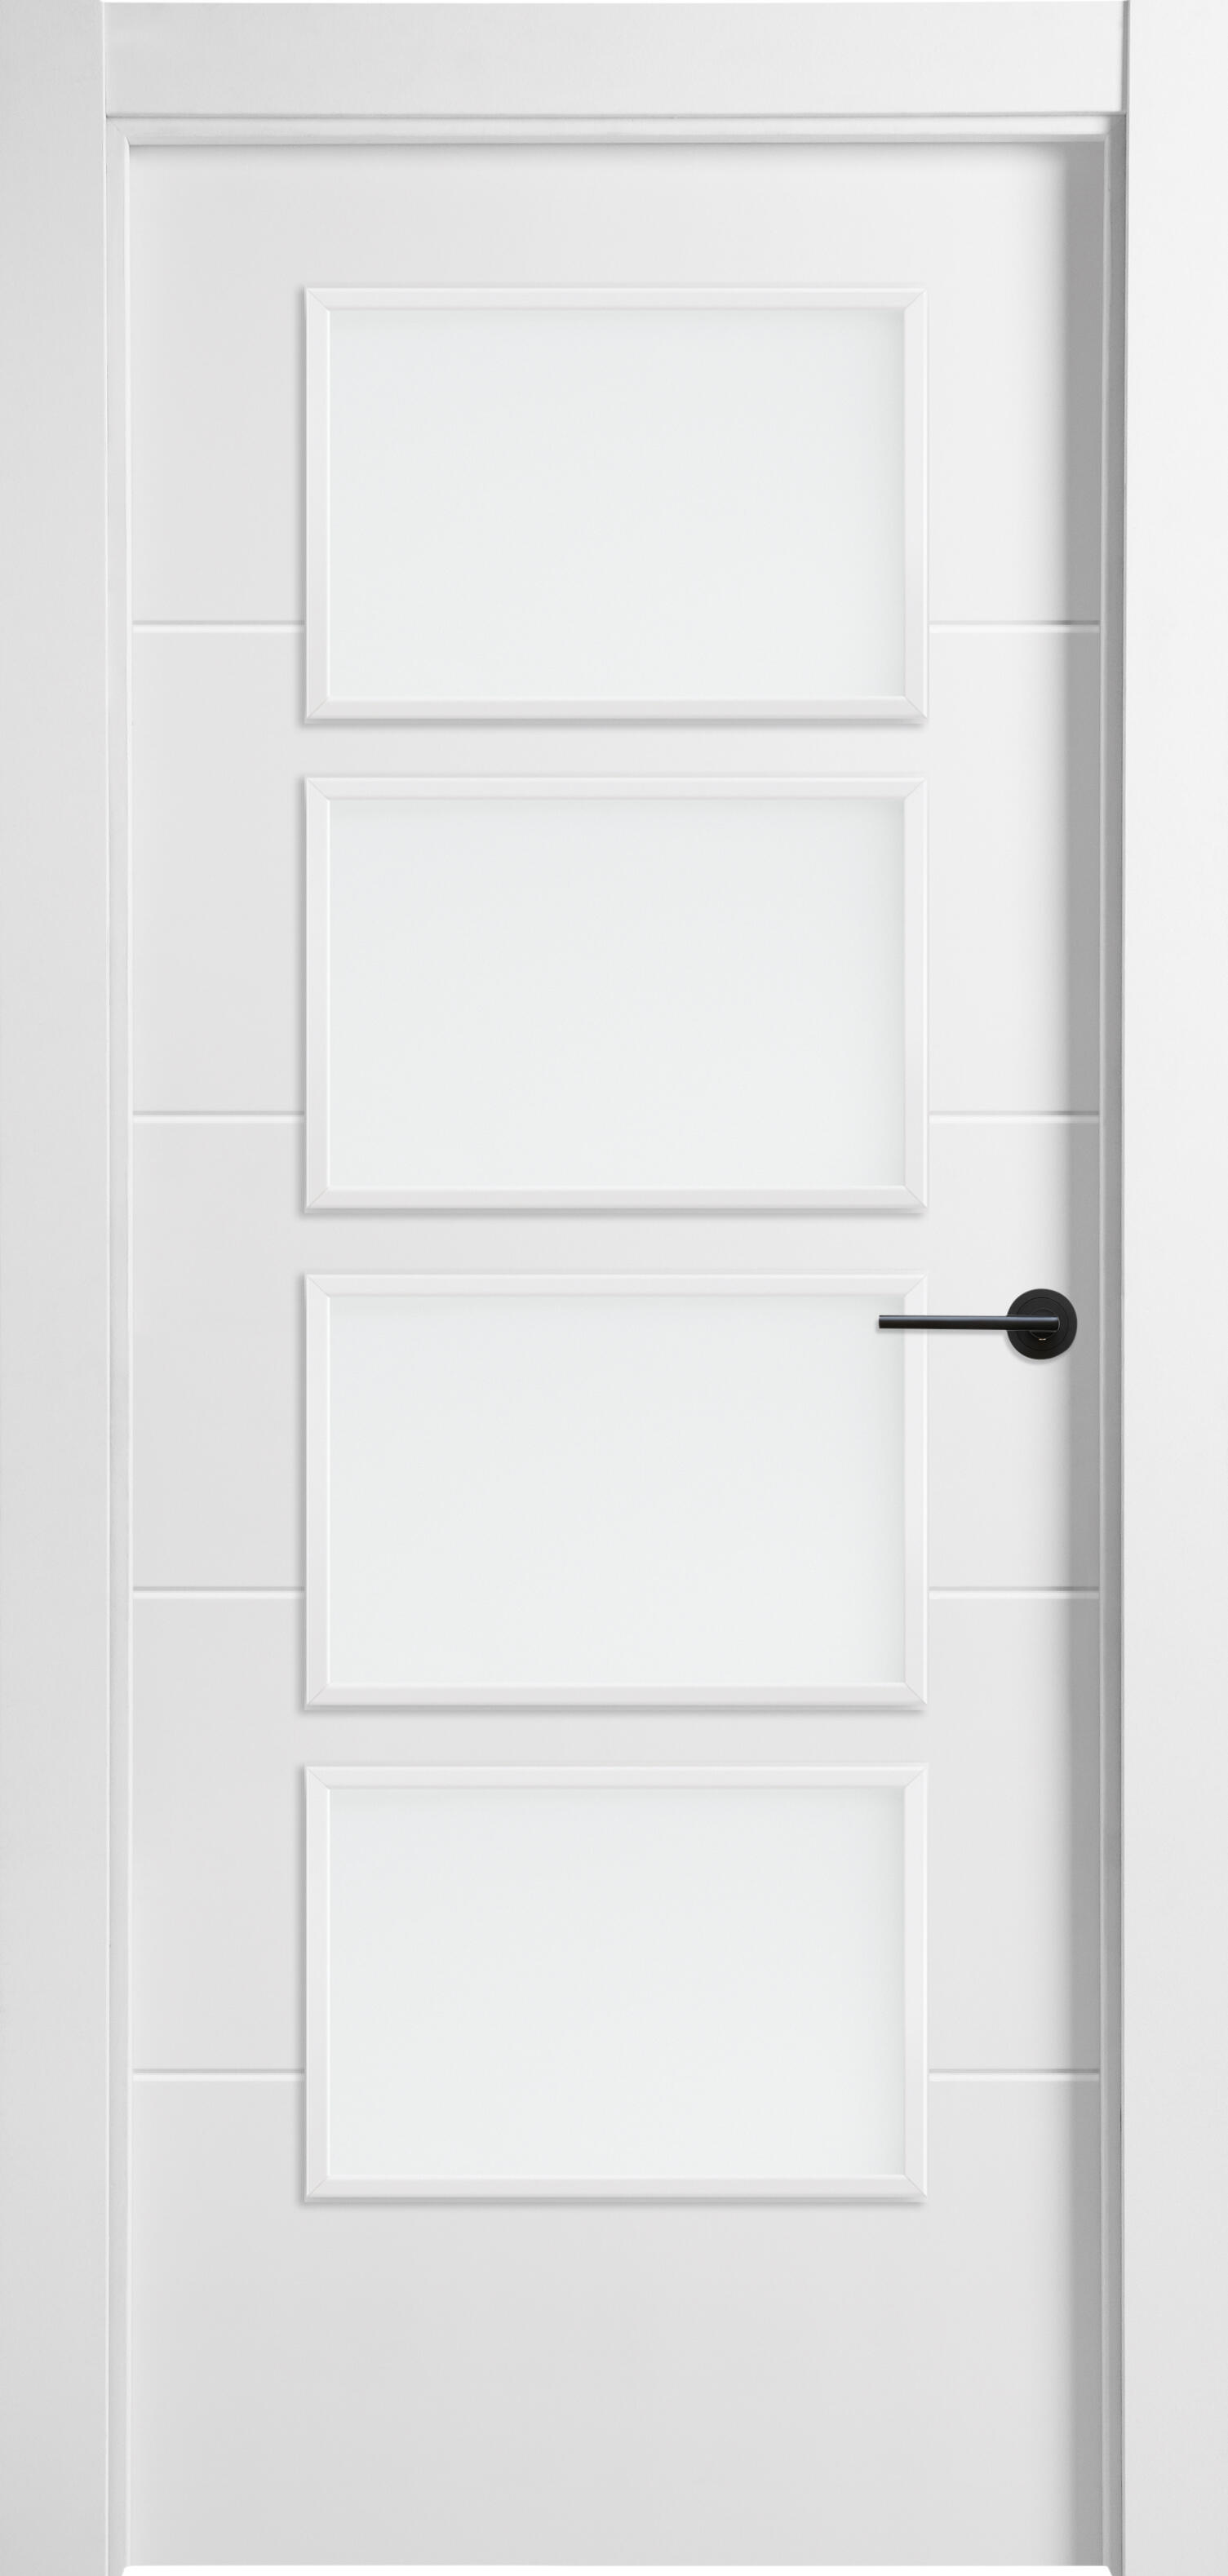 Puerta lucerna plus black blanco de apertura izquierda con cristal 92.5 cm